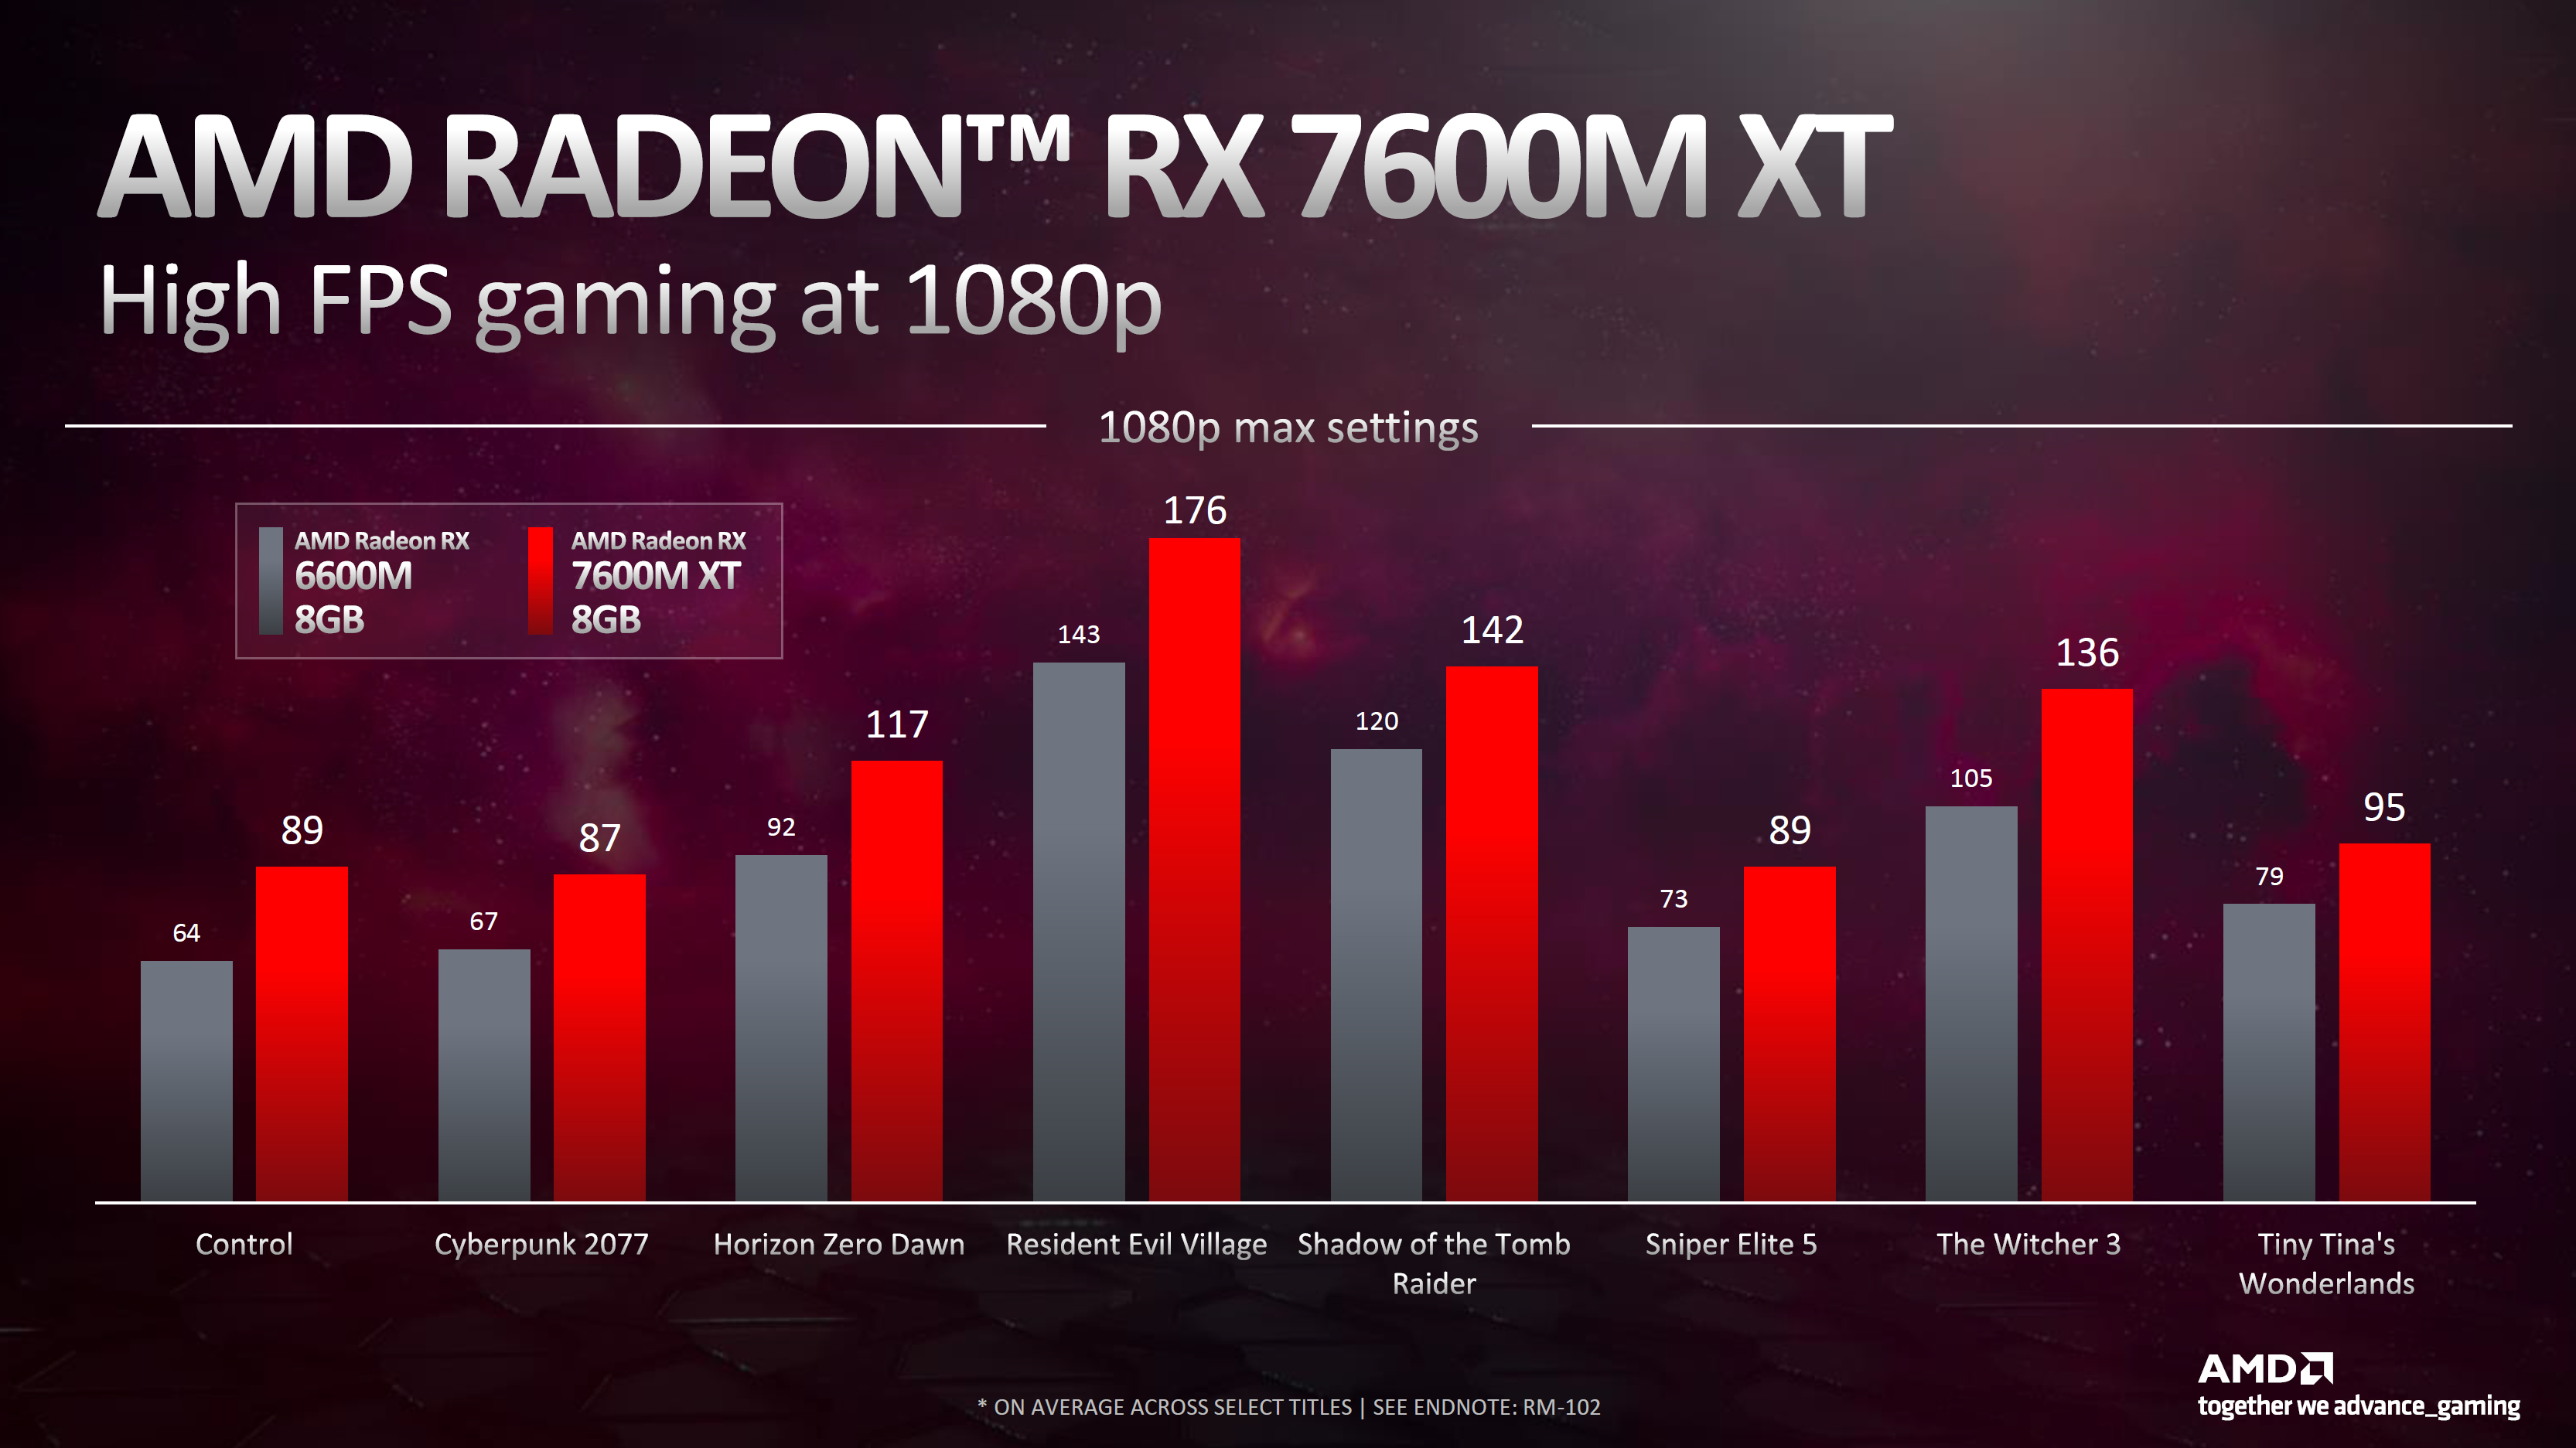 AMD press deck graph showing RX 7600M XT performance